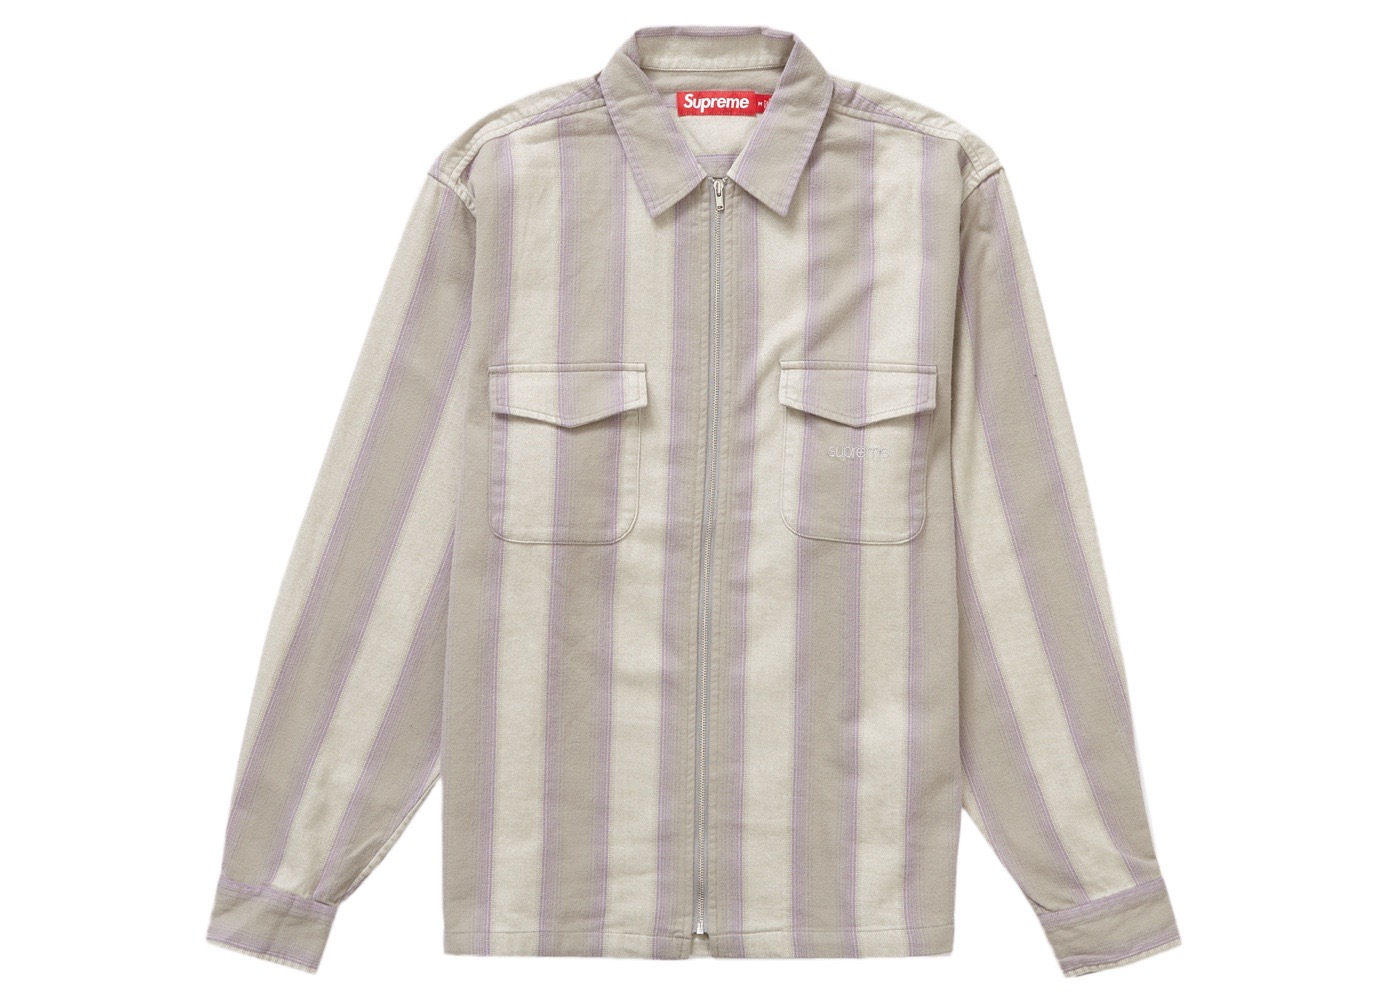 supremeSupreme Stripe Flannel Zip Up Shirt